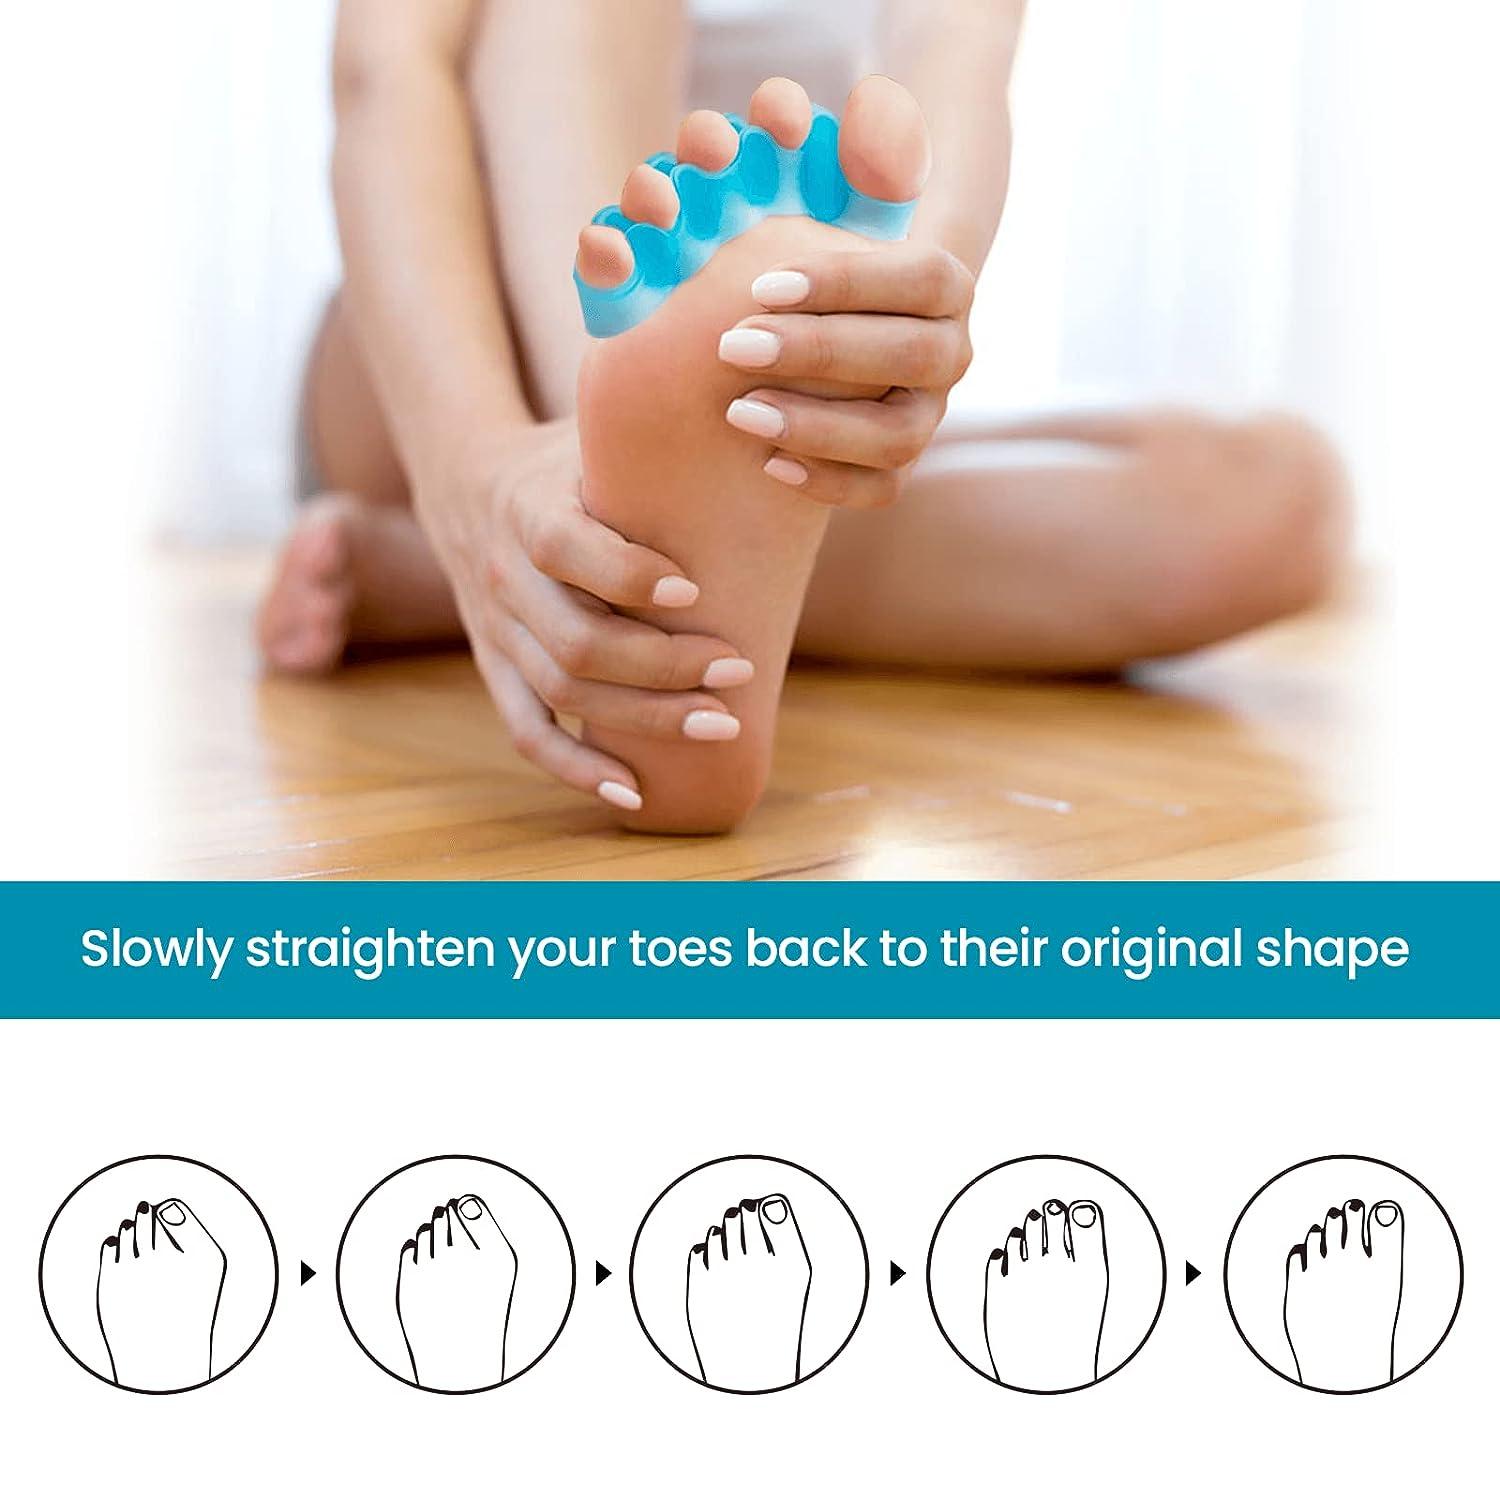 Sumiwish Toe Separators 8 Pcs Toe Stretcher for Therapeutic Relief